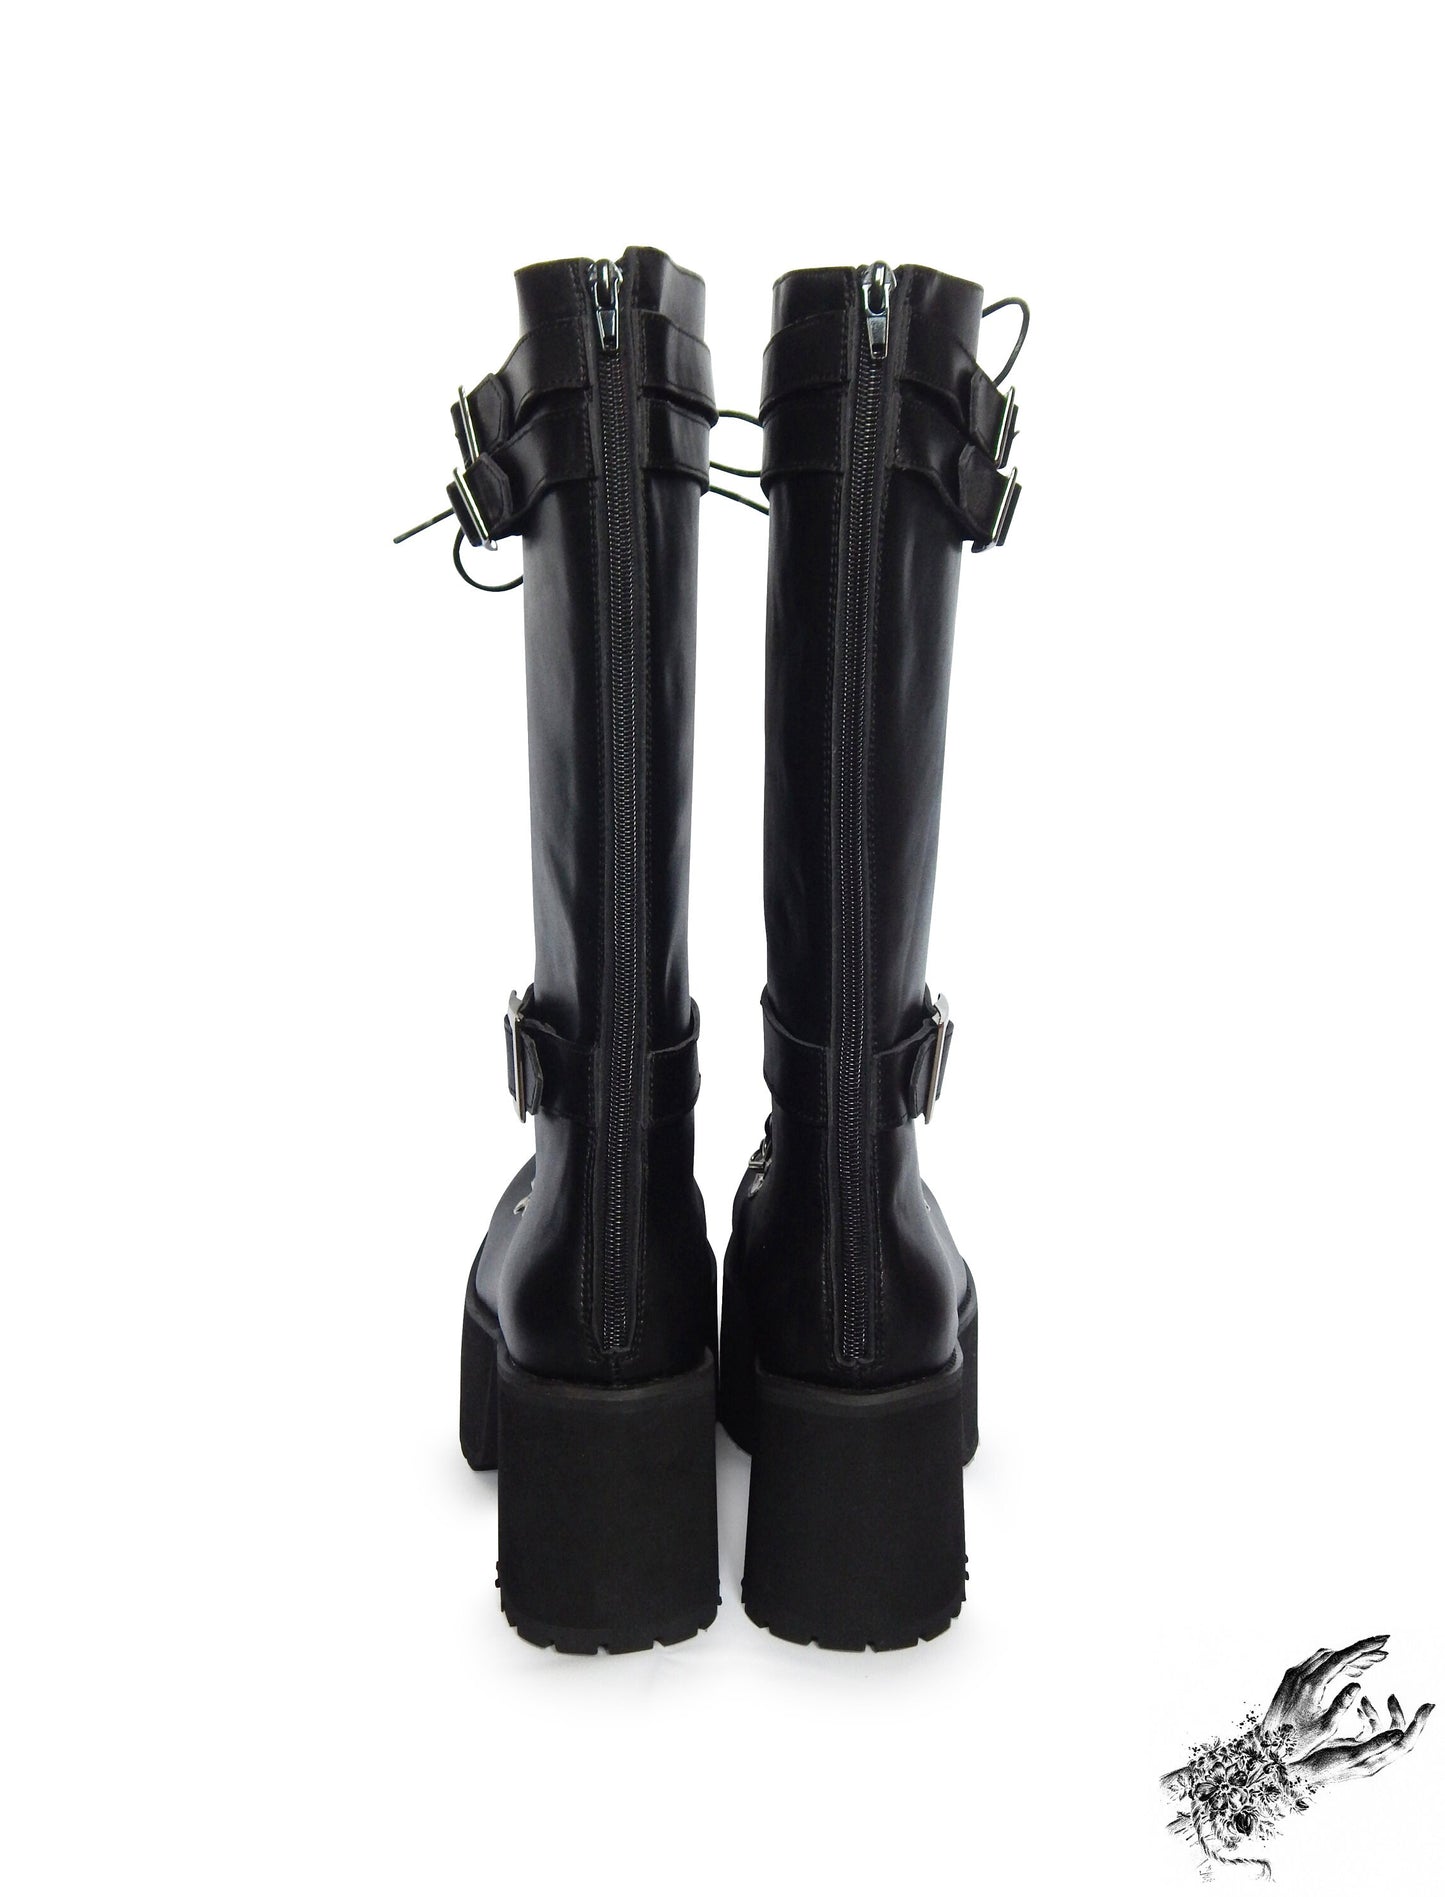 Black Matte Leather Knee High Platform Boots, "Lexa" Gothic Platform Boots